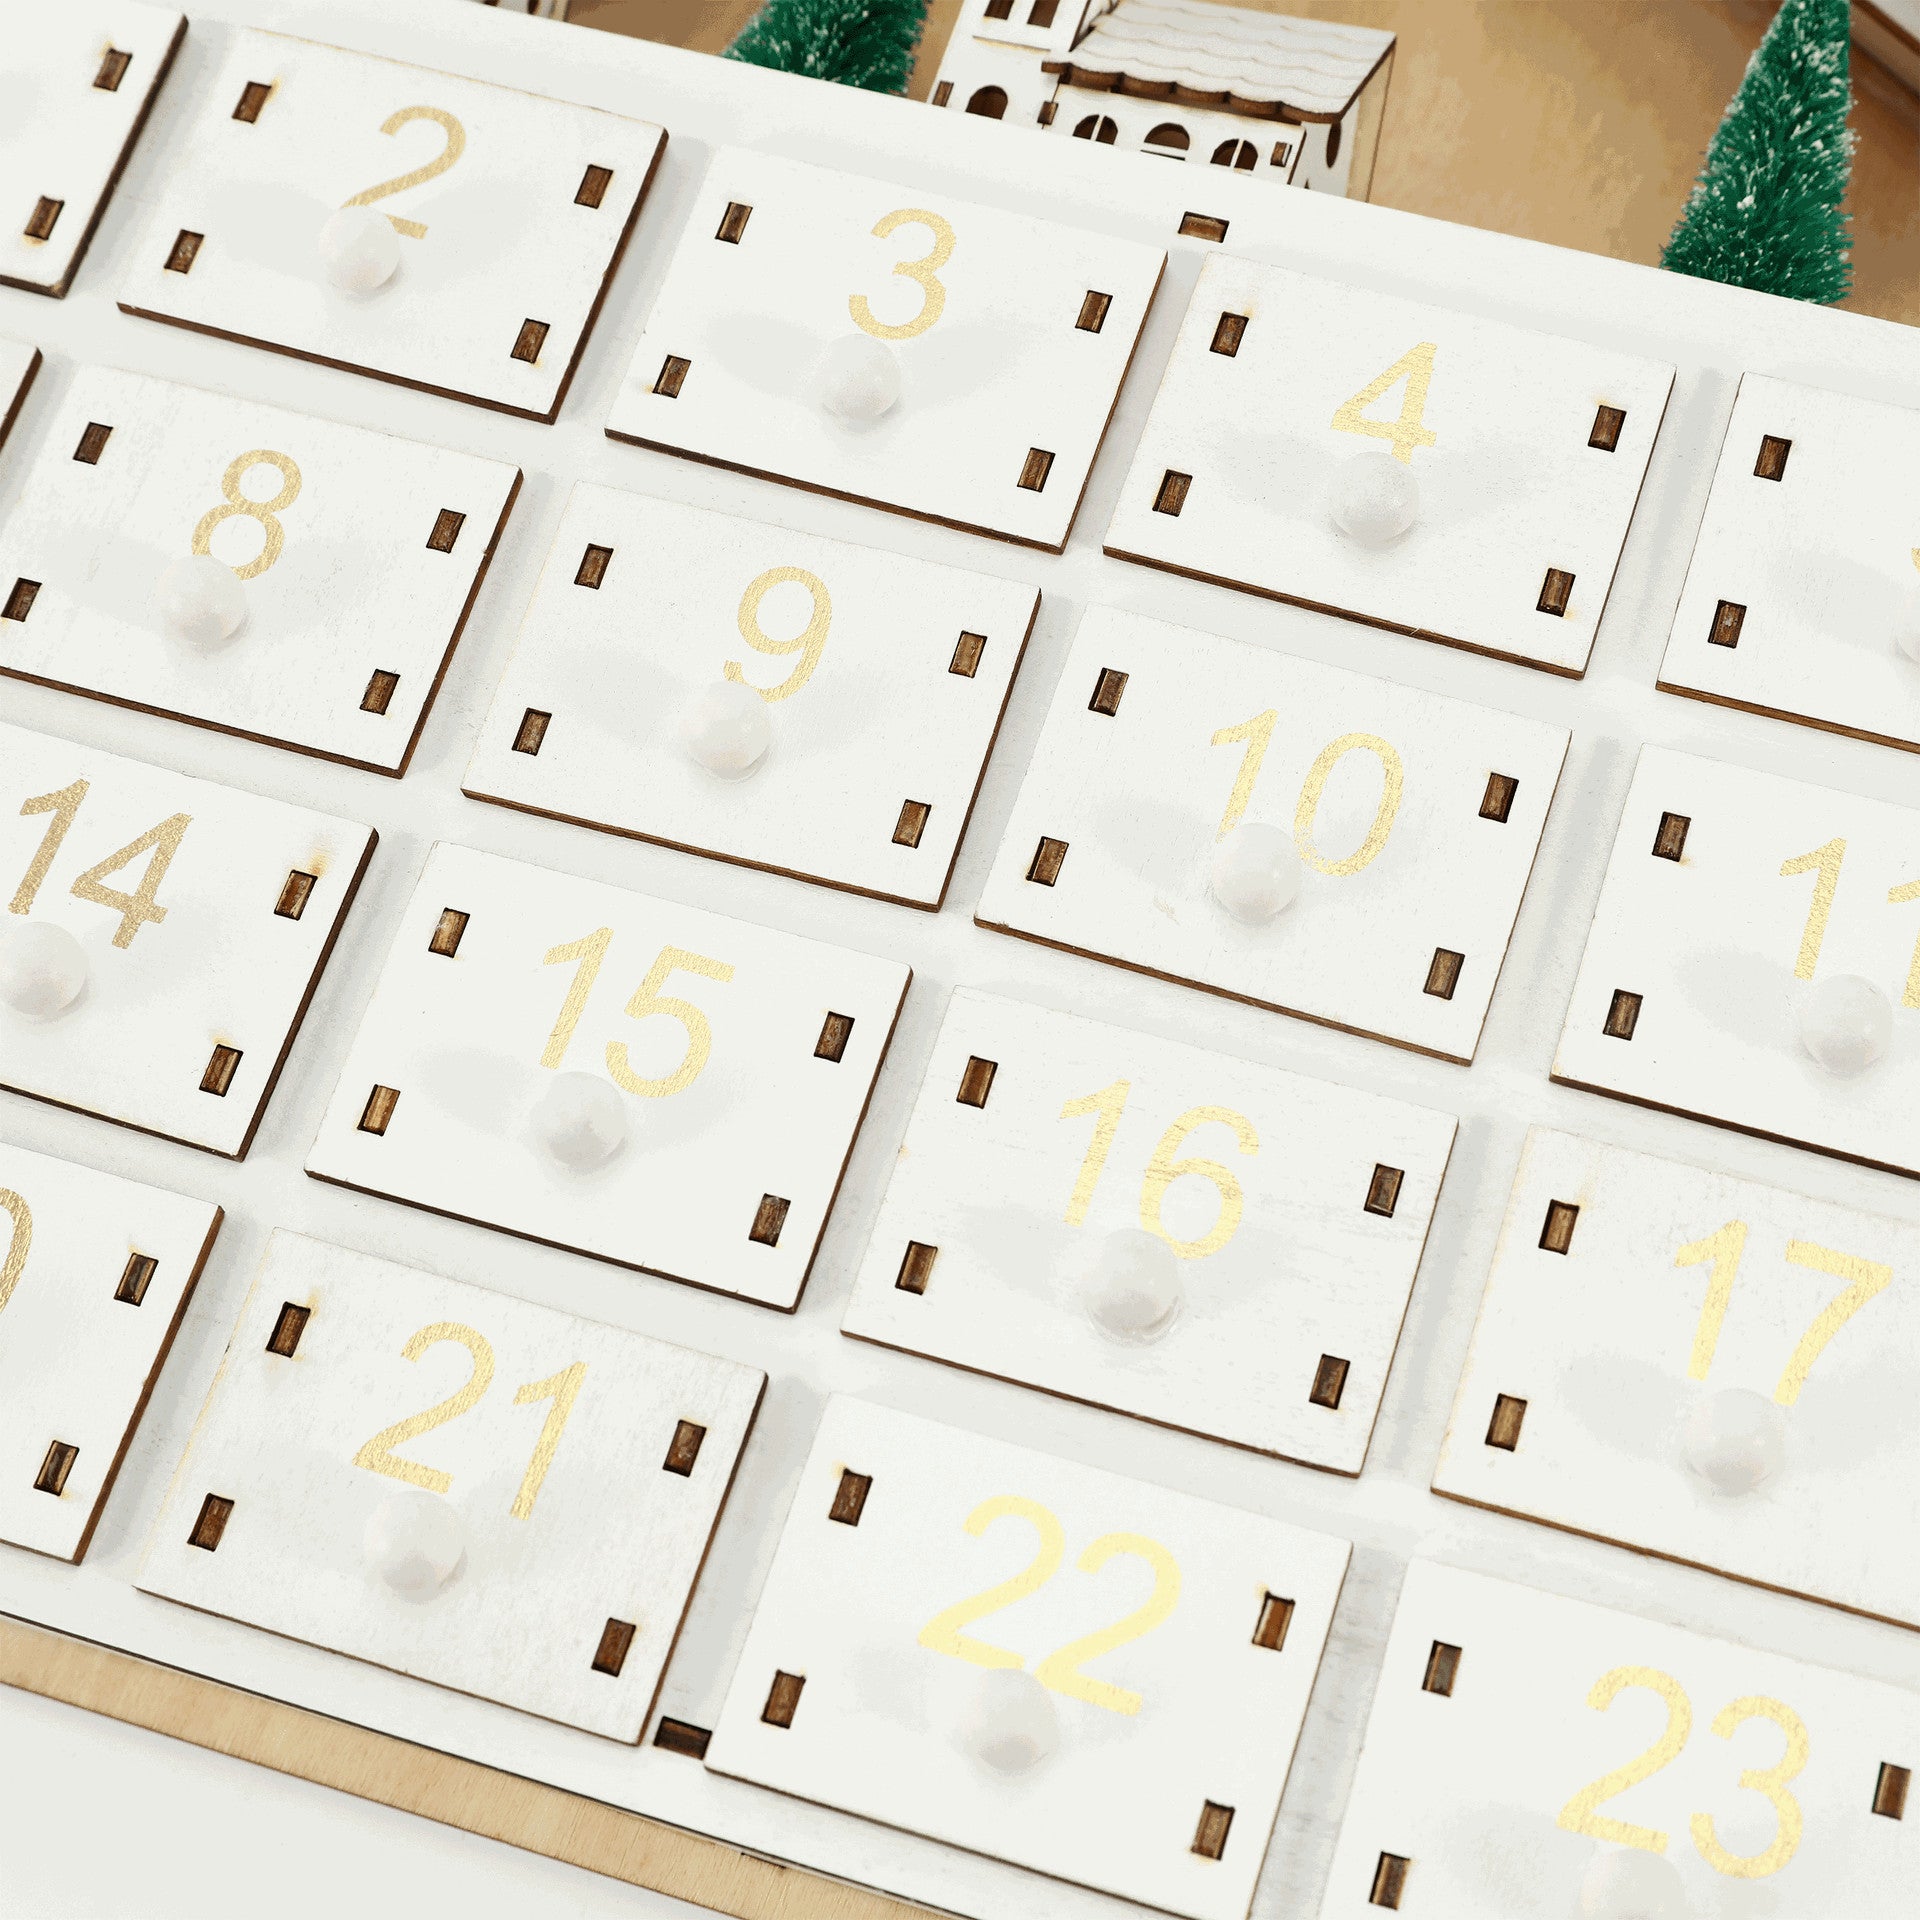 Countdown Calendar Christmas Digital Decoration, Christmas decoration, Christmas Wooden Ornaments, Christmas Calendar, Christmas Decoration Calender